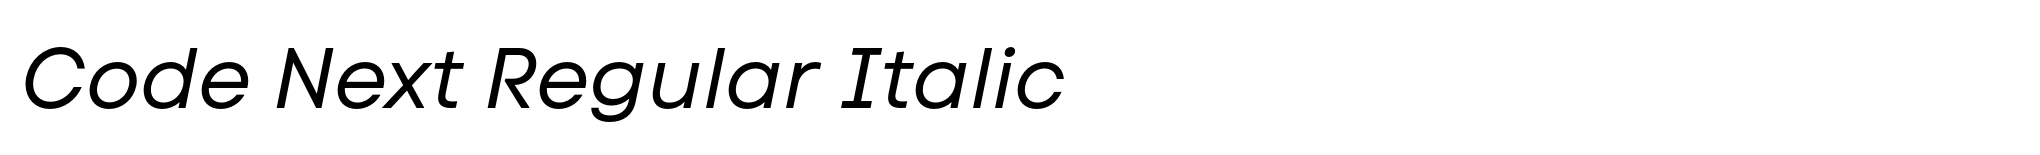 Code Next Regular Italic image